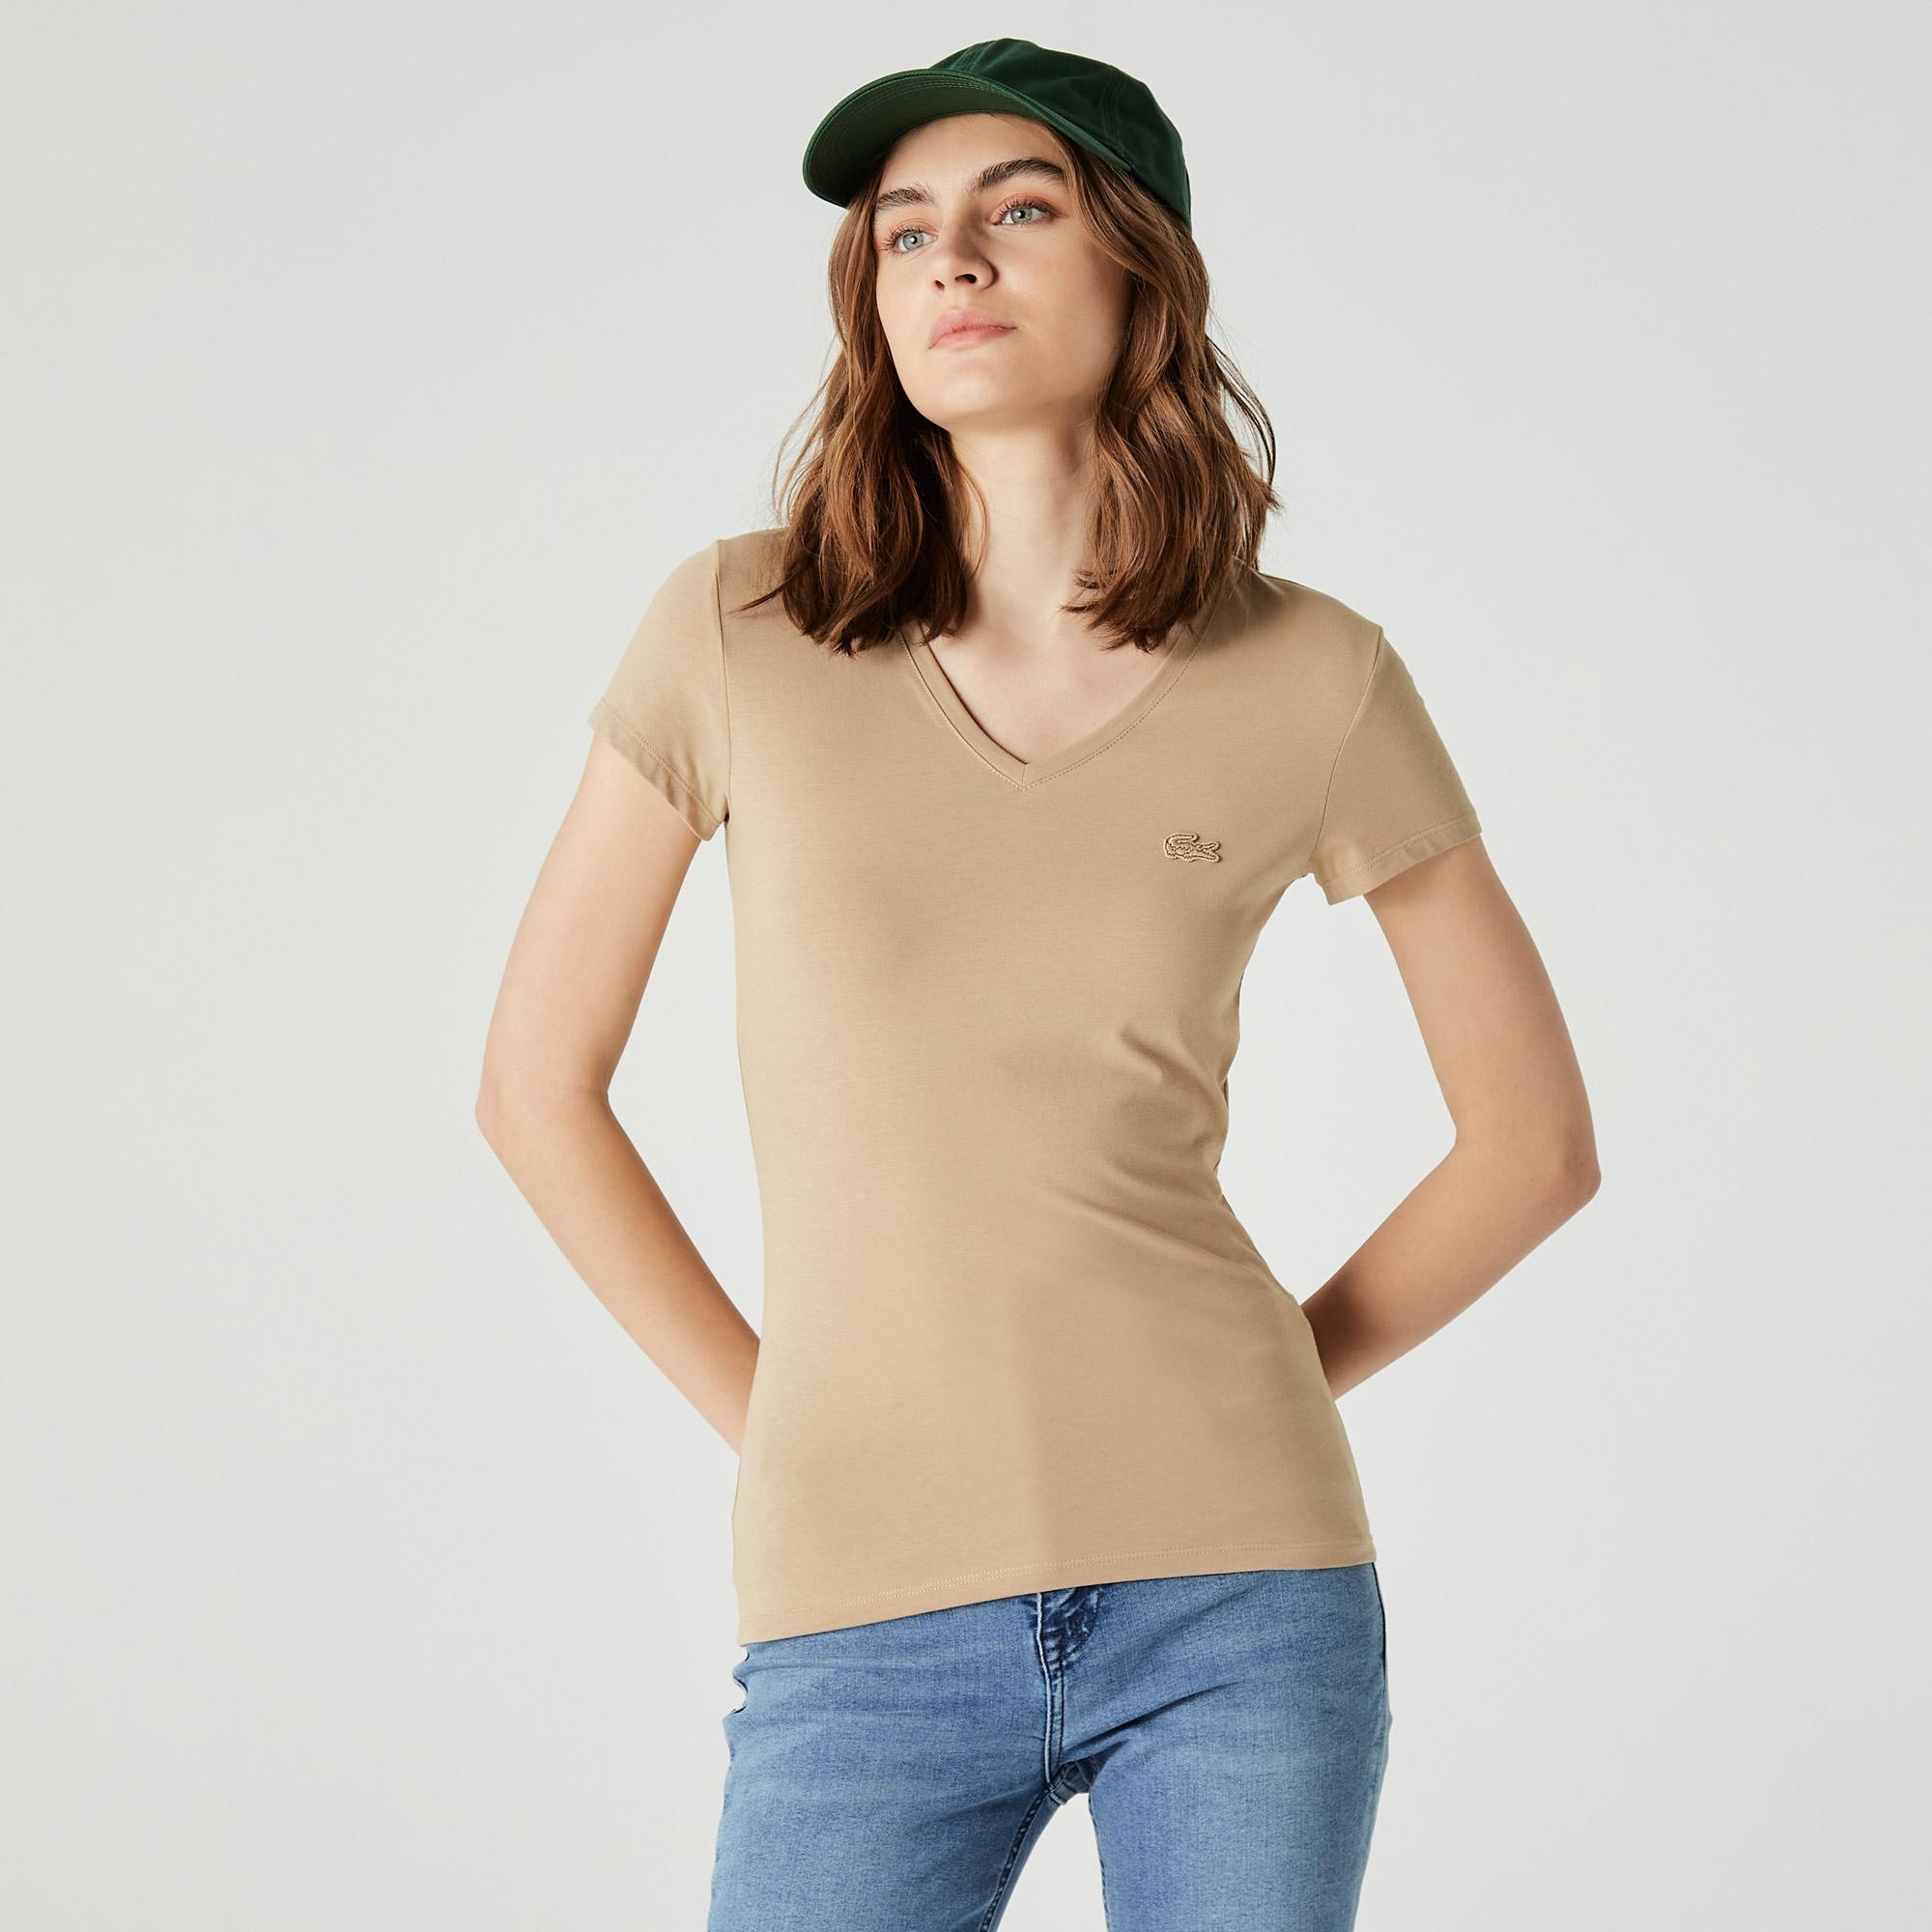 Lacoste Kadın Slim Fit V Yaka Bej T-Shirt. 4